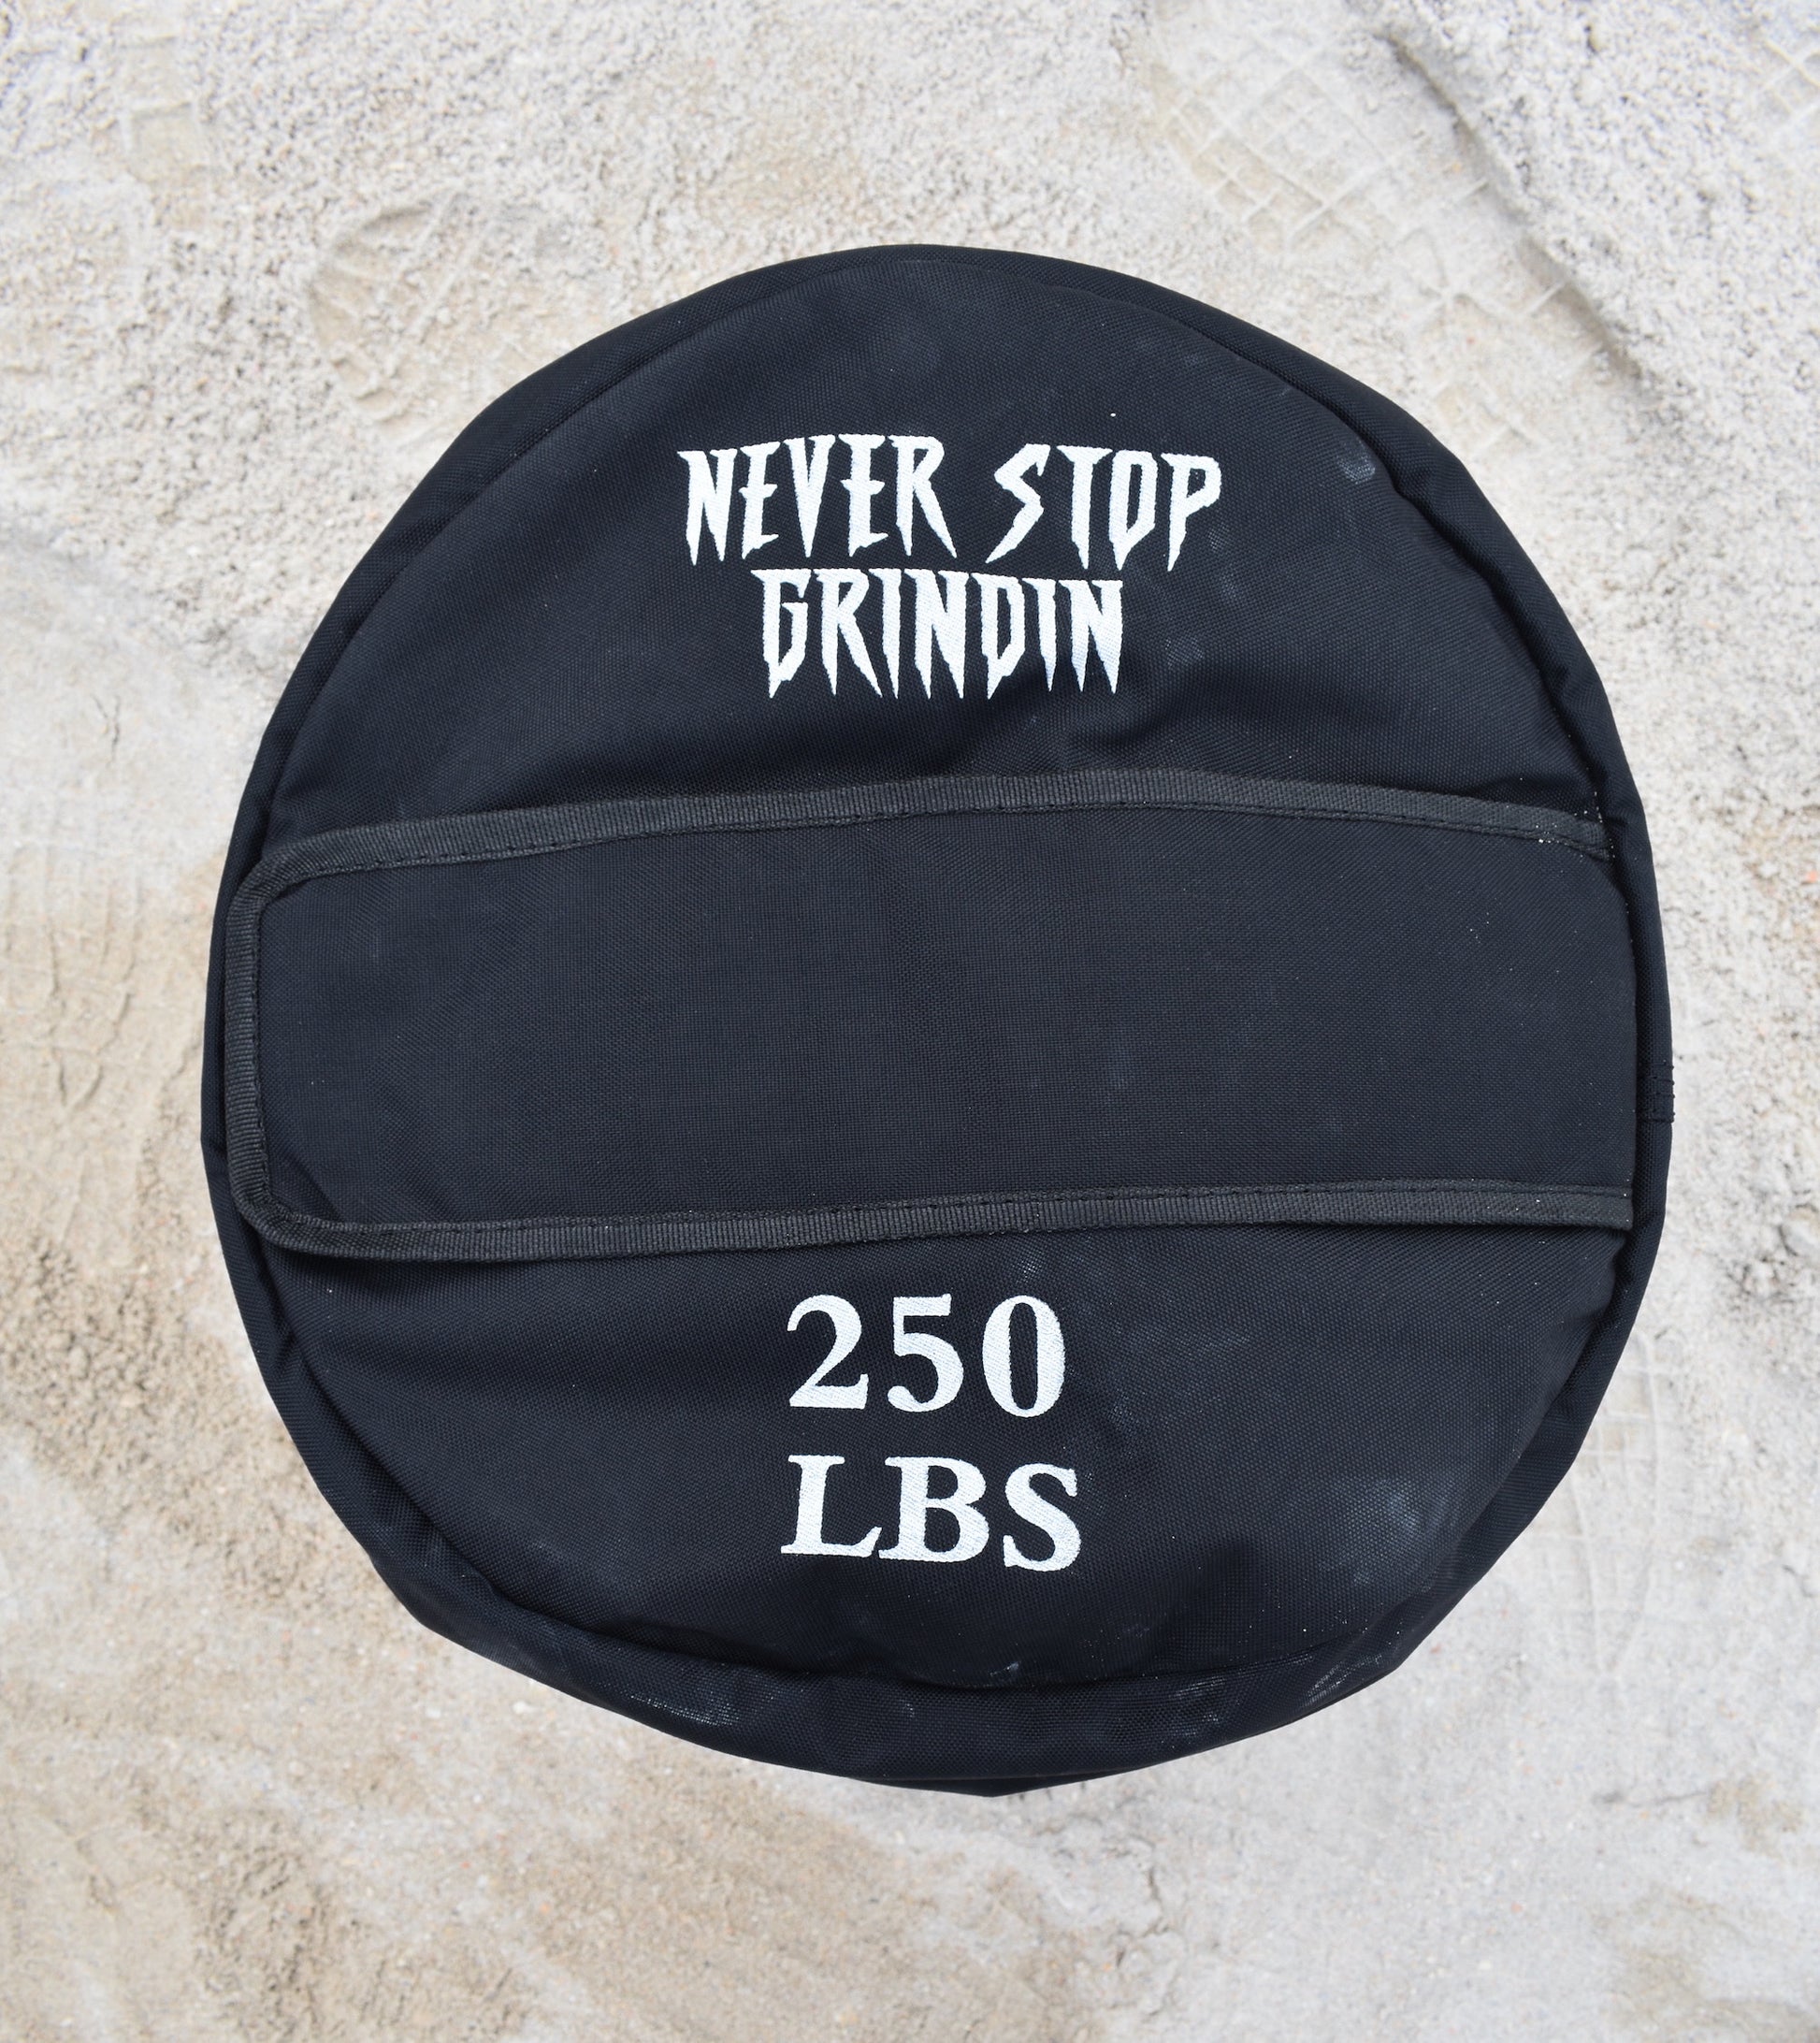 Sandbag (250LB) - Never Stop Grindin